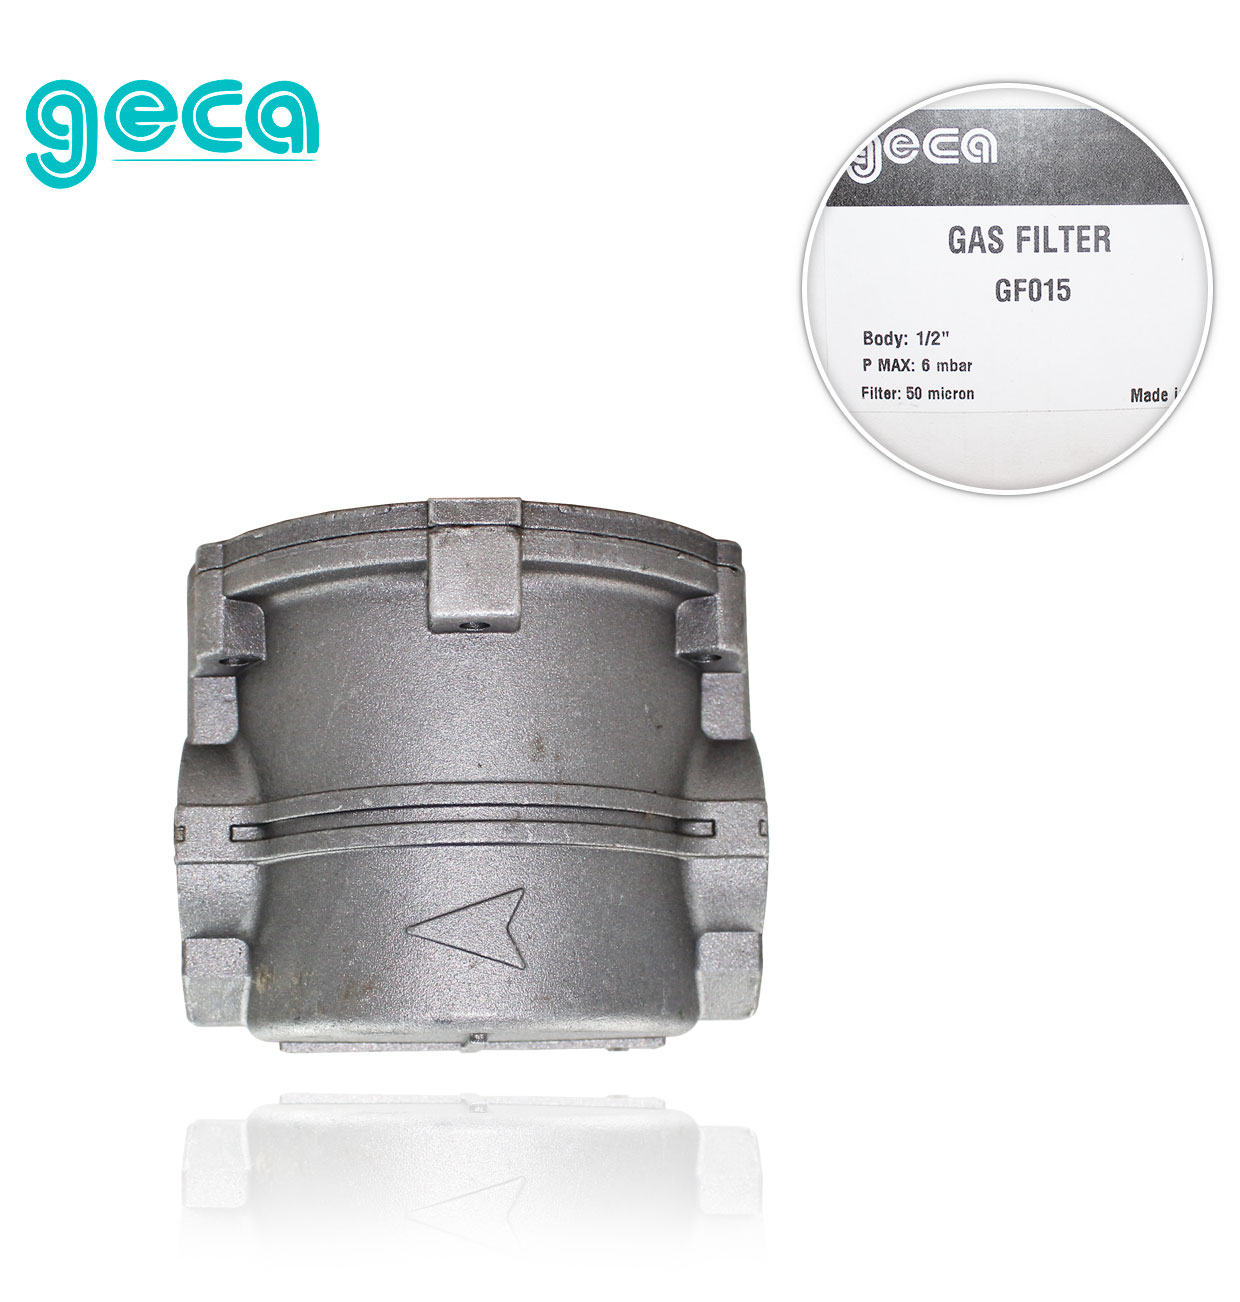 1/2" maximum pressure 6bar GAS FILTER